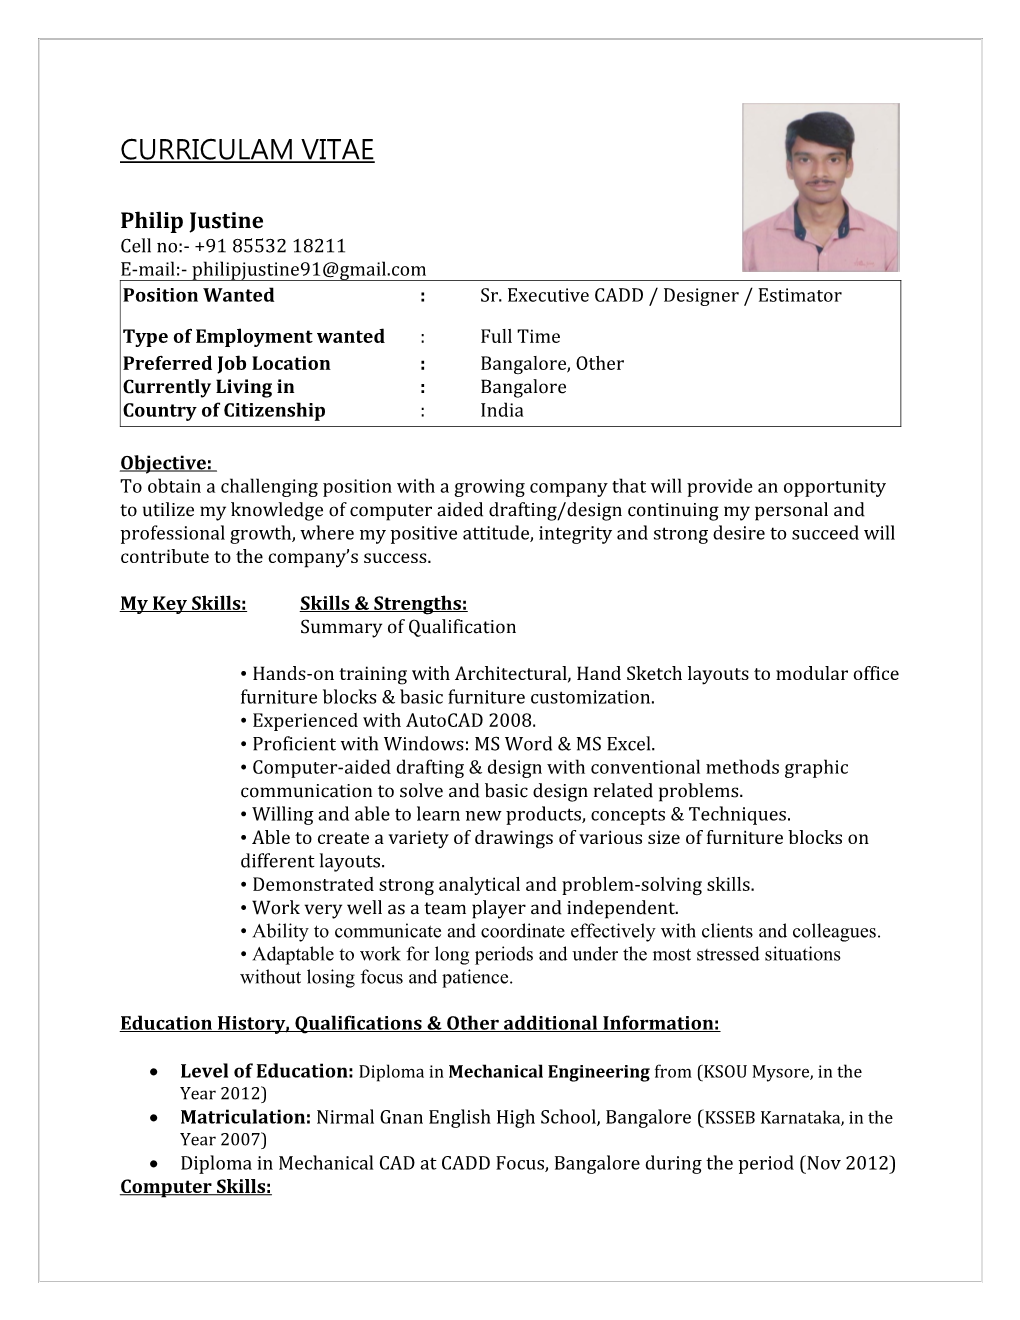 Position Wanted : Sr. Executive CADD / Designer / Estimator